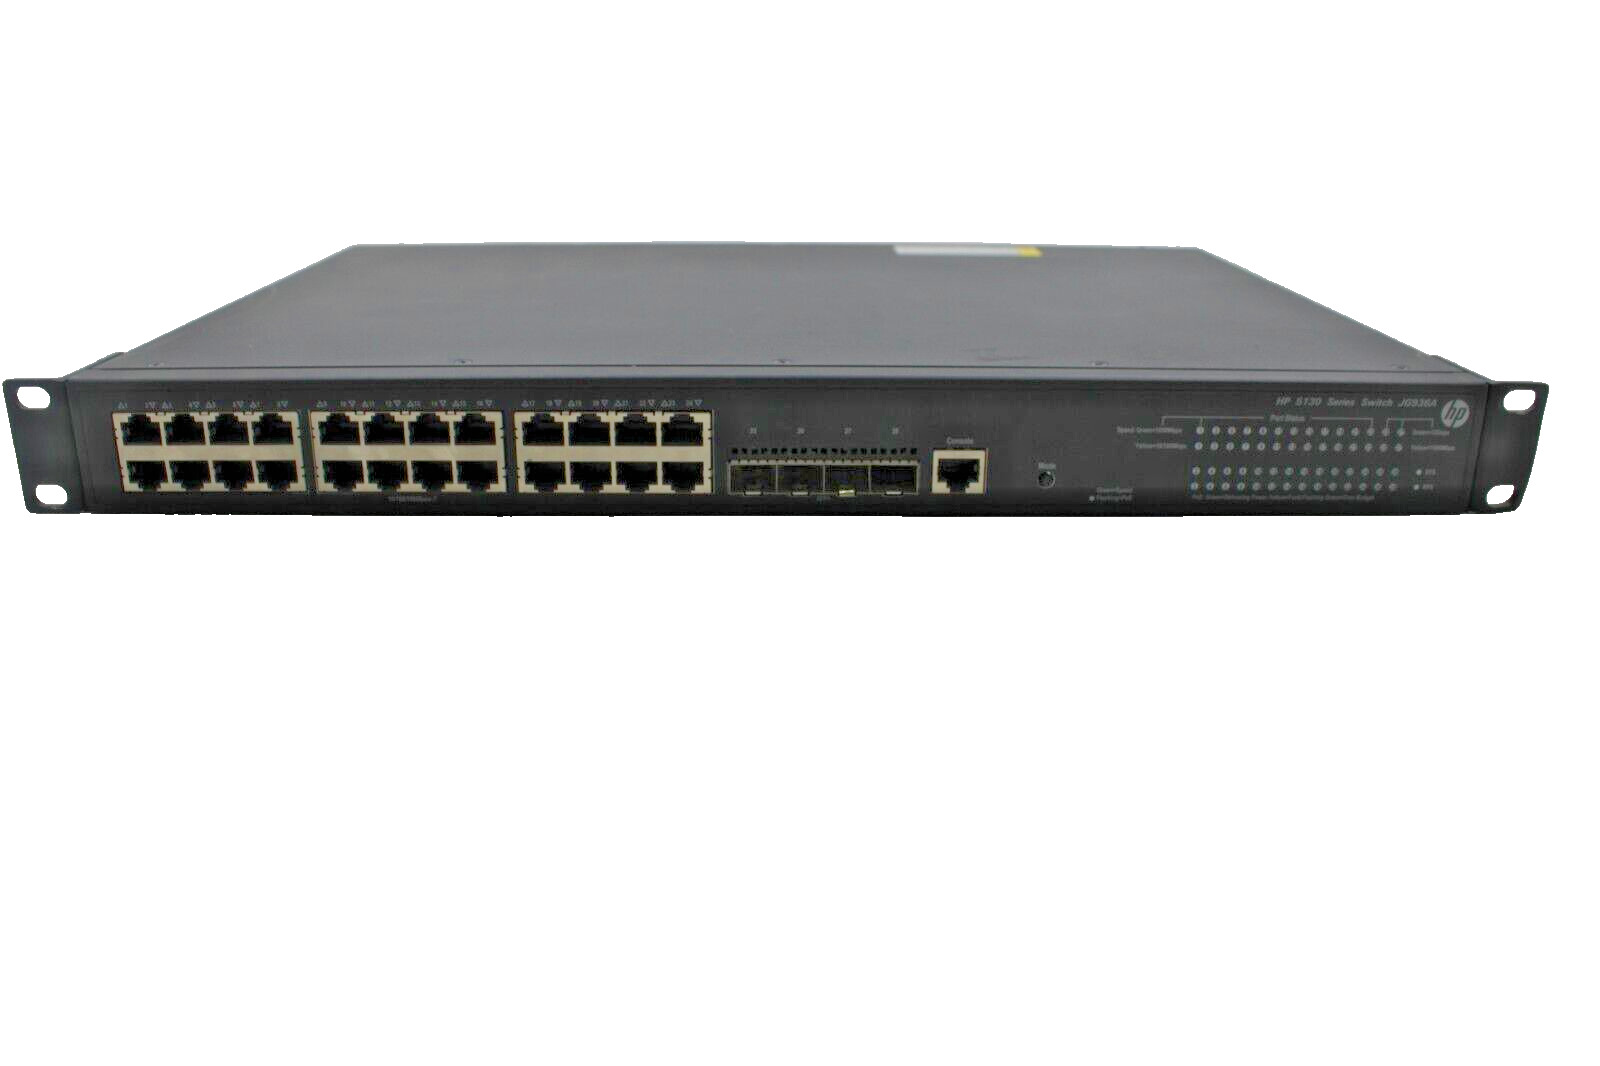 HP JG936A Flexnetwork 5130-24G PoE+ 24-Port Gigabit Network Switch TESTED